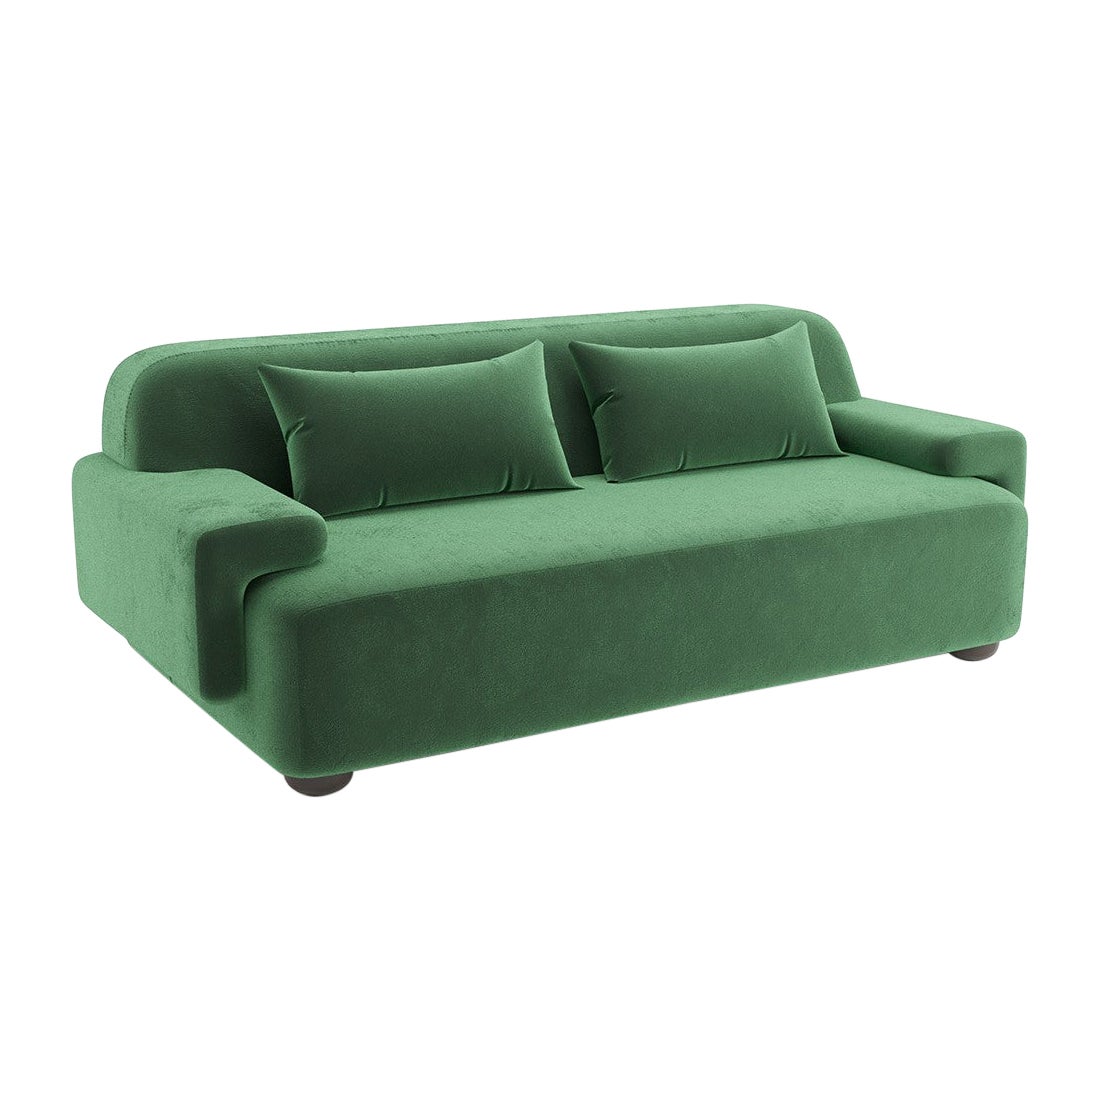 Popus Editions Lena 3 Seater Sofa in Green '771727' Como Velvet Upholstery